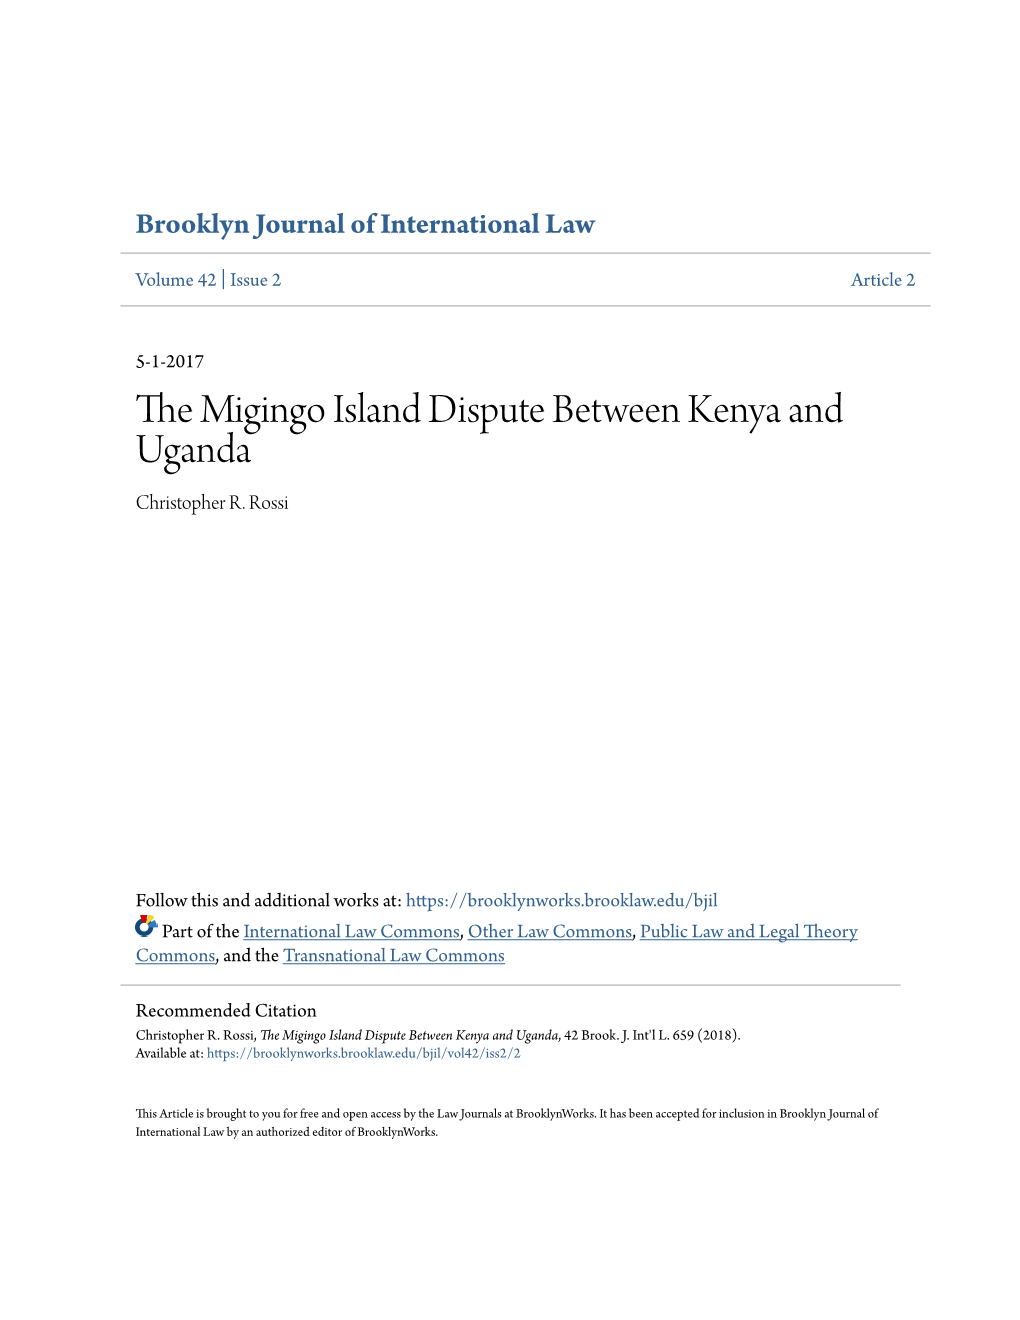 The Migingo Island Dispute Between Kenya and Uganda, 42 Brook